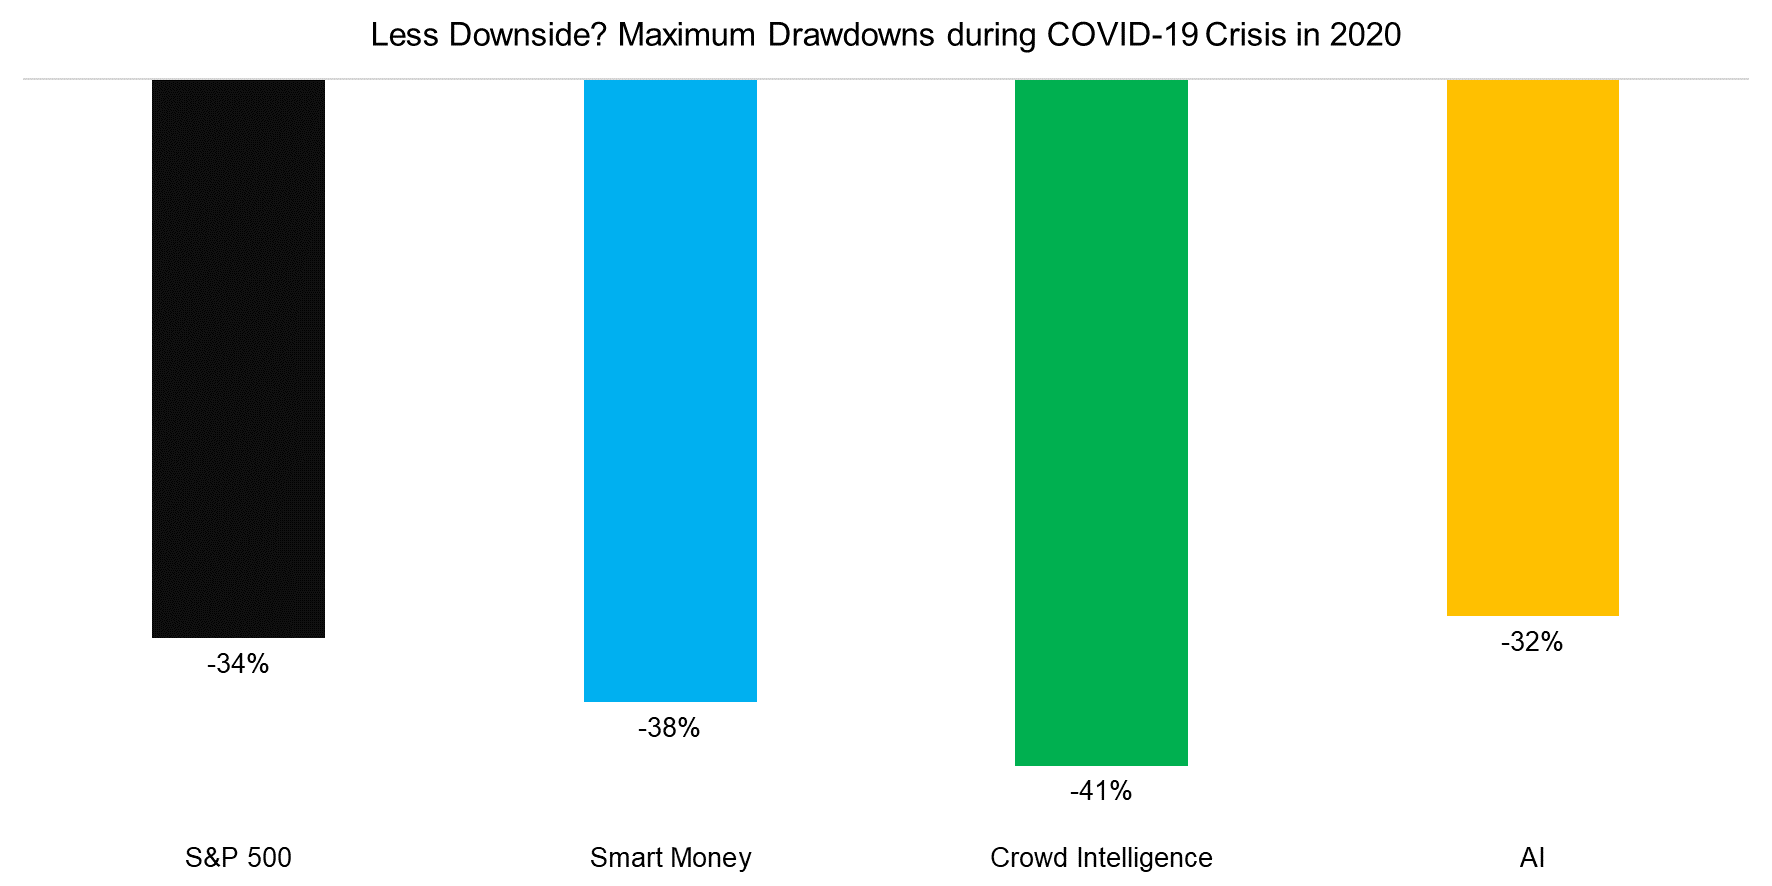 Less Downside Maximum Drawdowns during COVID-19 Crisis in 2020